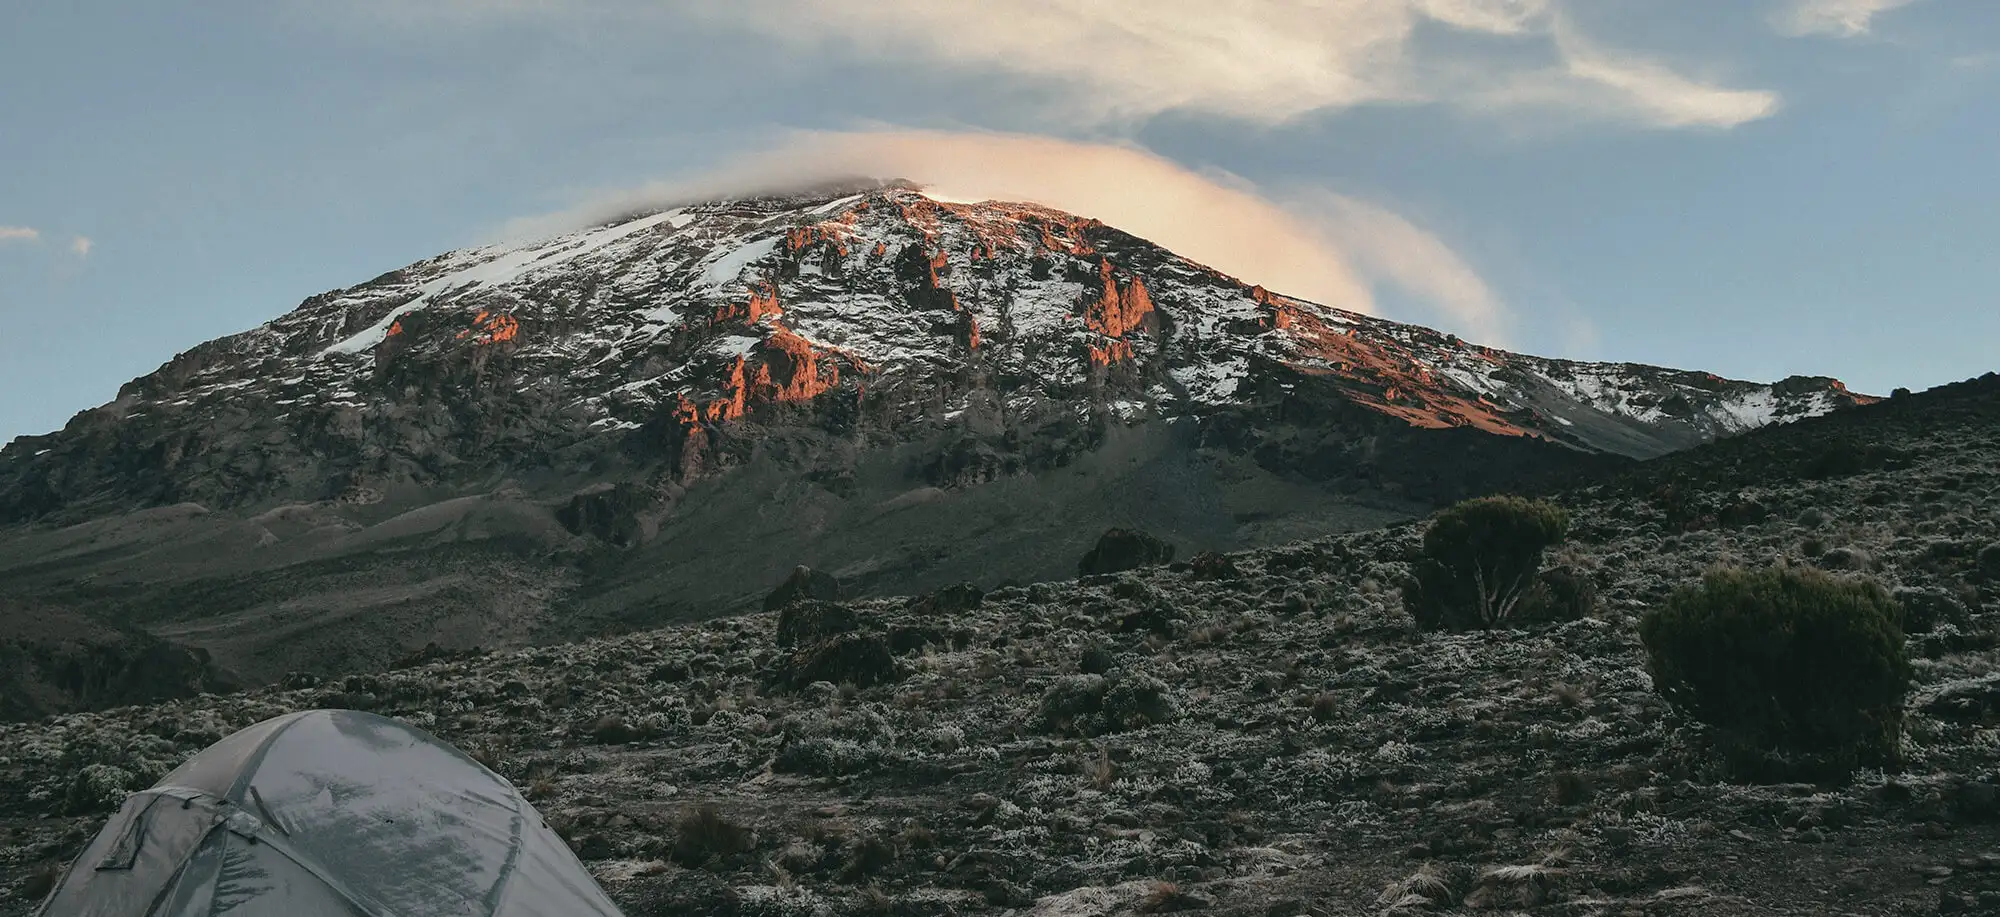  Kilimanjaro